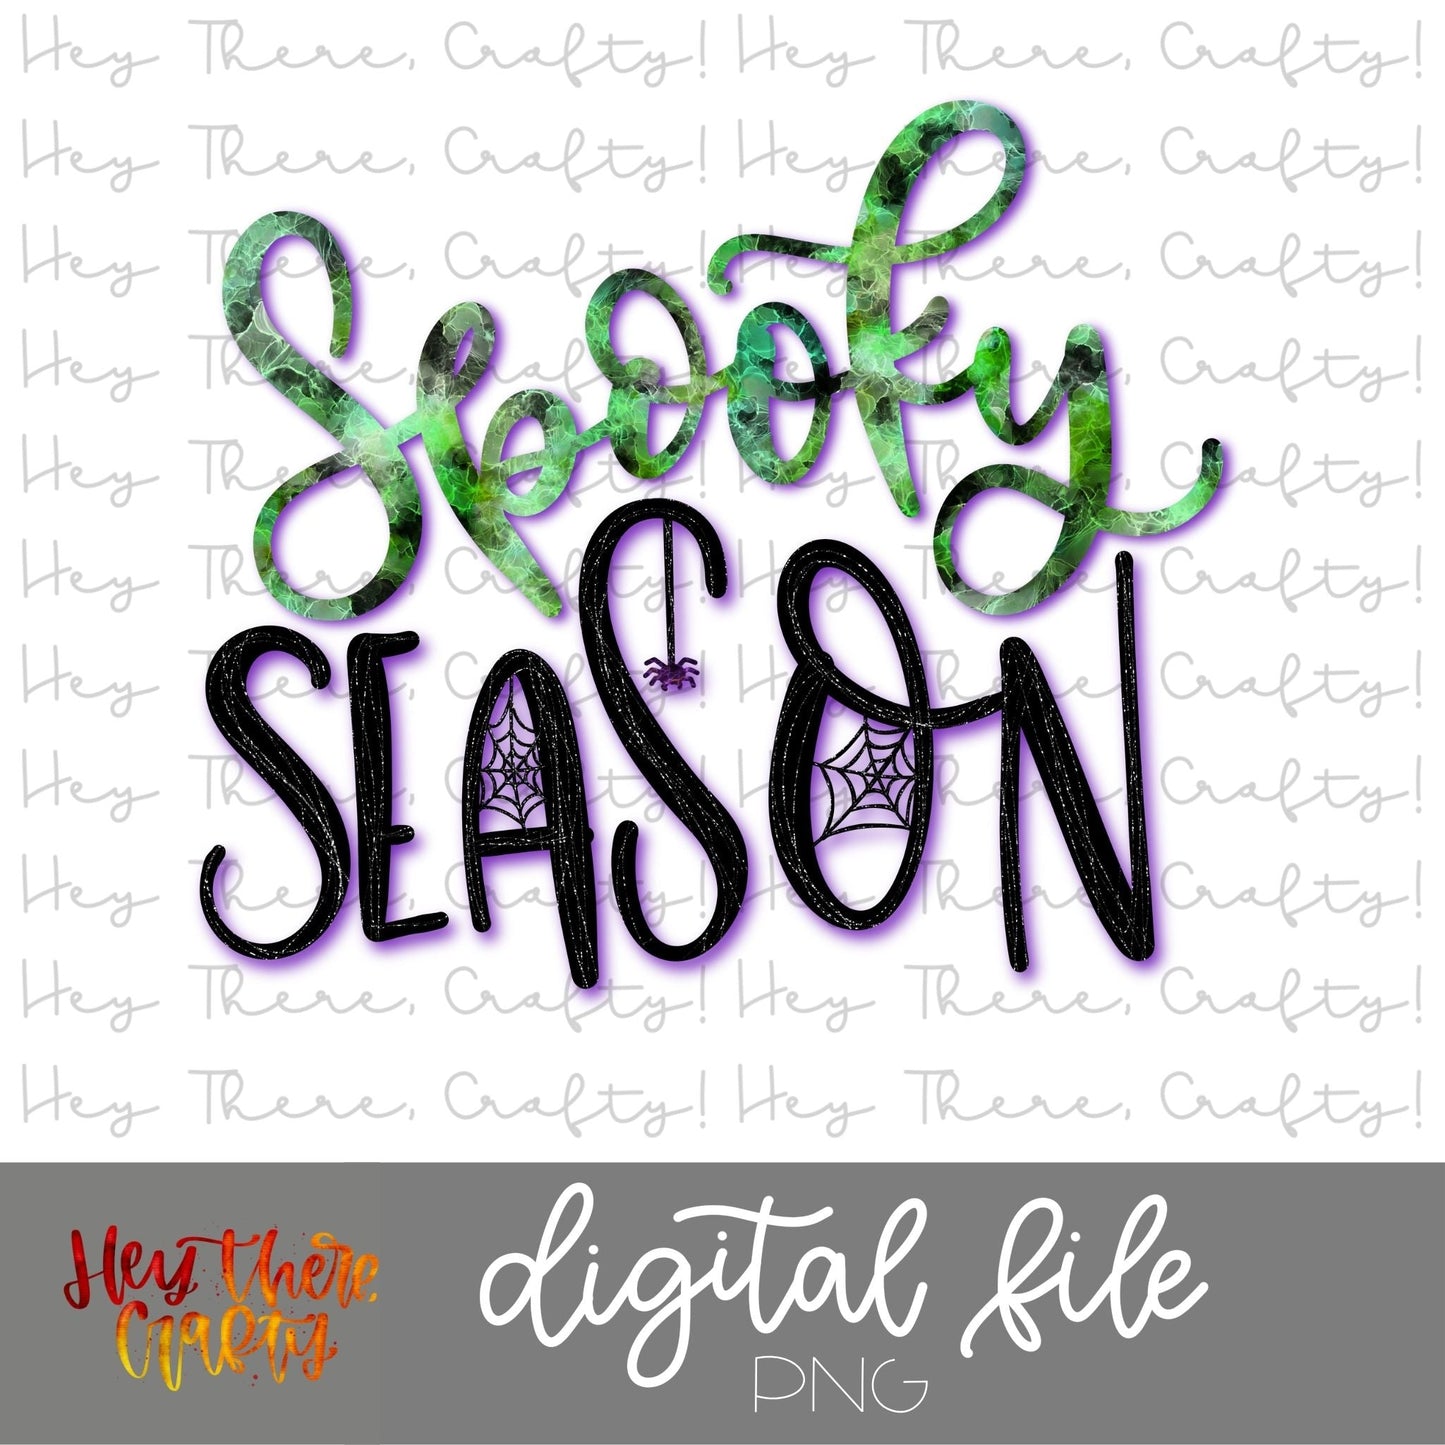 Spooky Season | PNG File